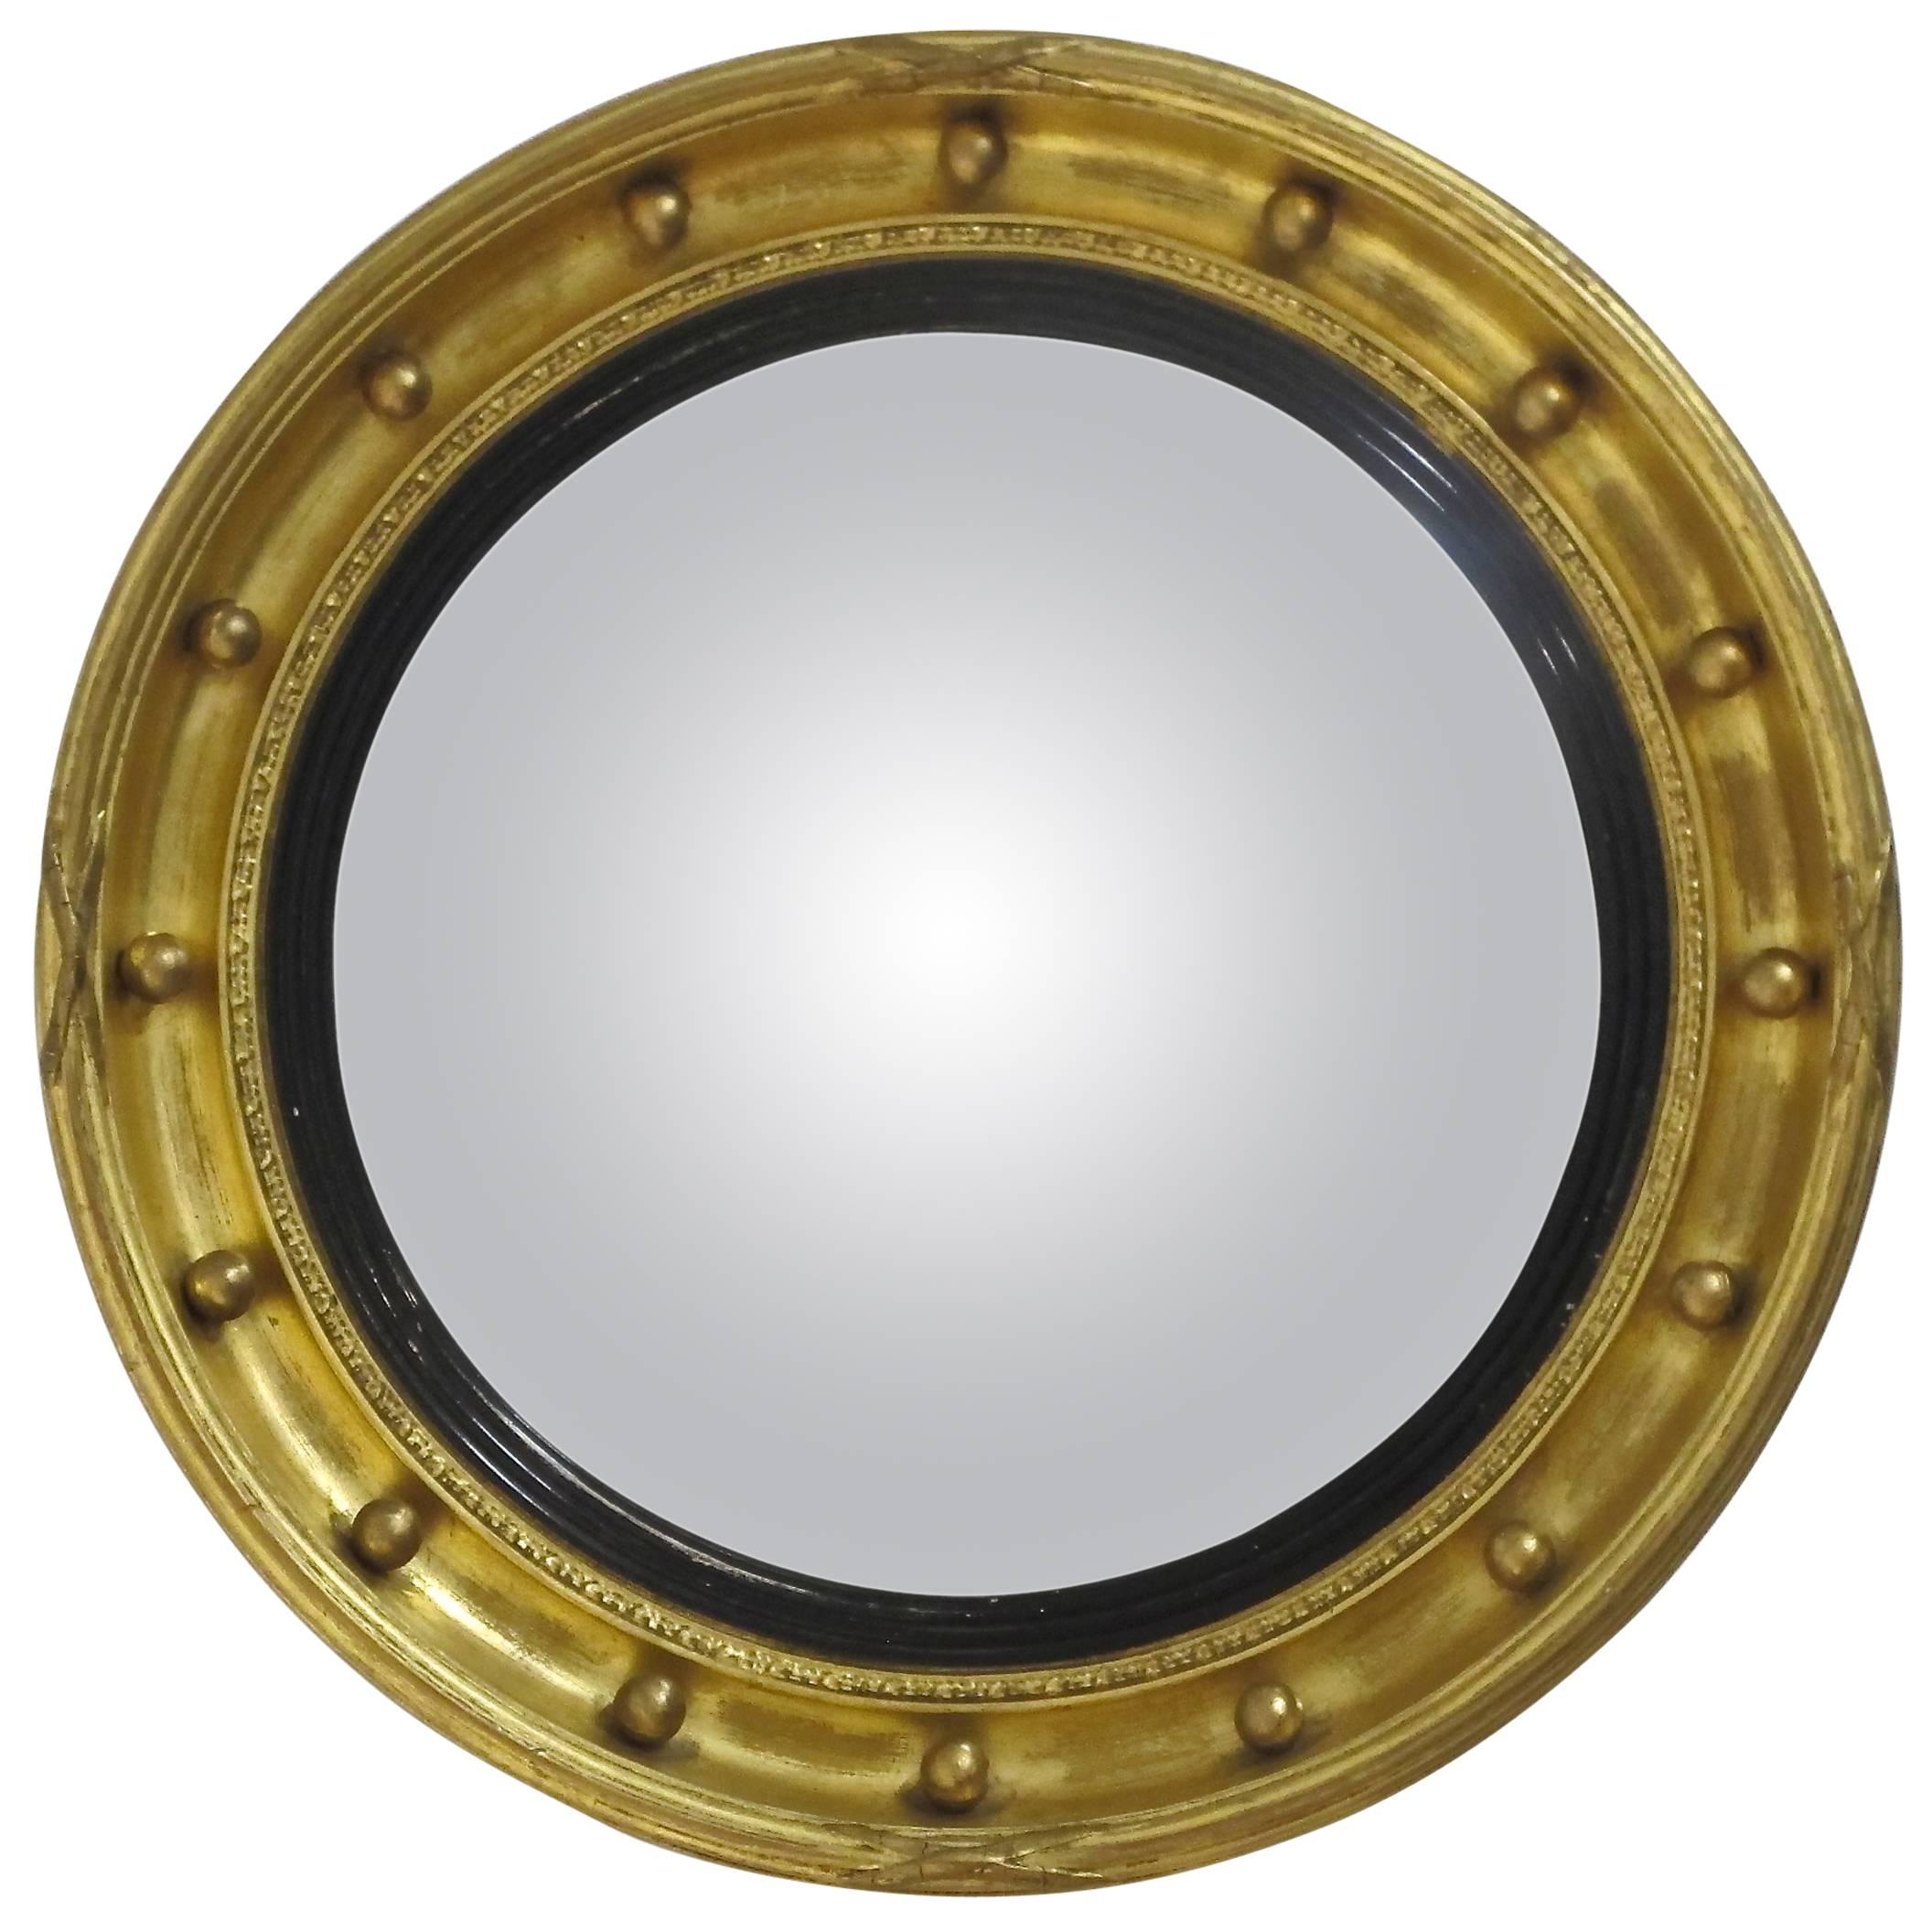 Regency Style Convex Mirror, 19th Century English